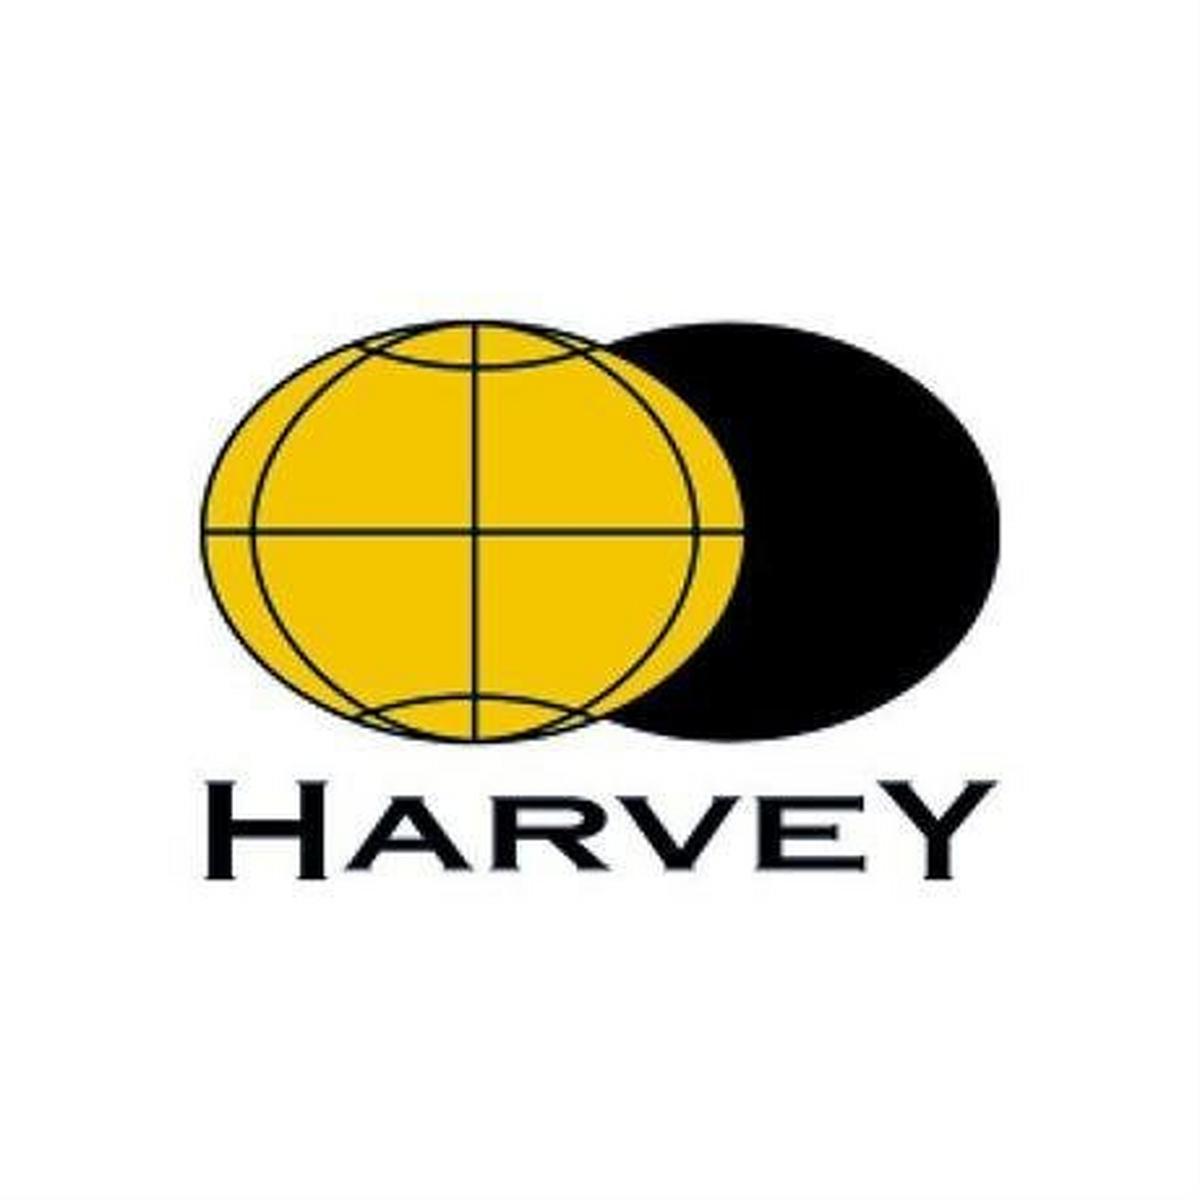 Harveys Harvey Map - XT60: Coast to Coast - East -  for Mountain Bikers and Cyclists